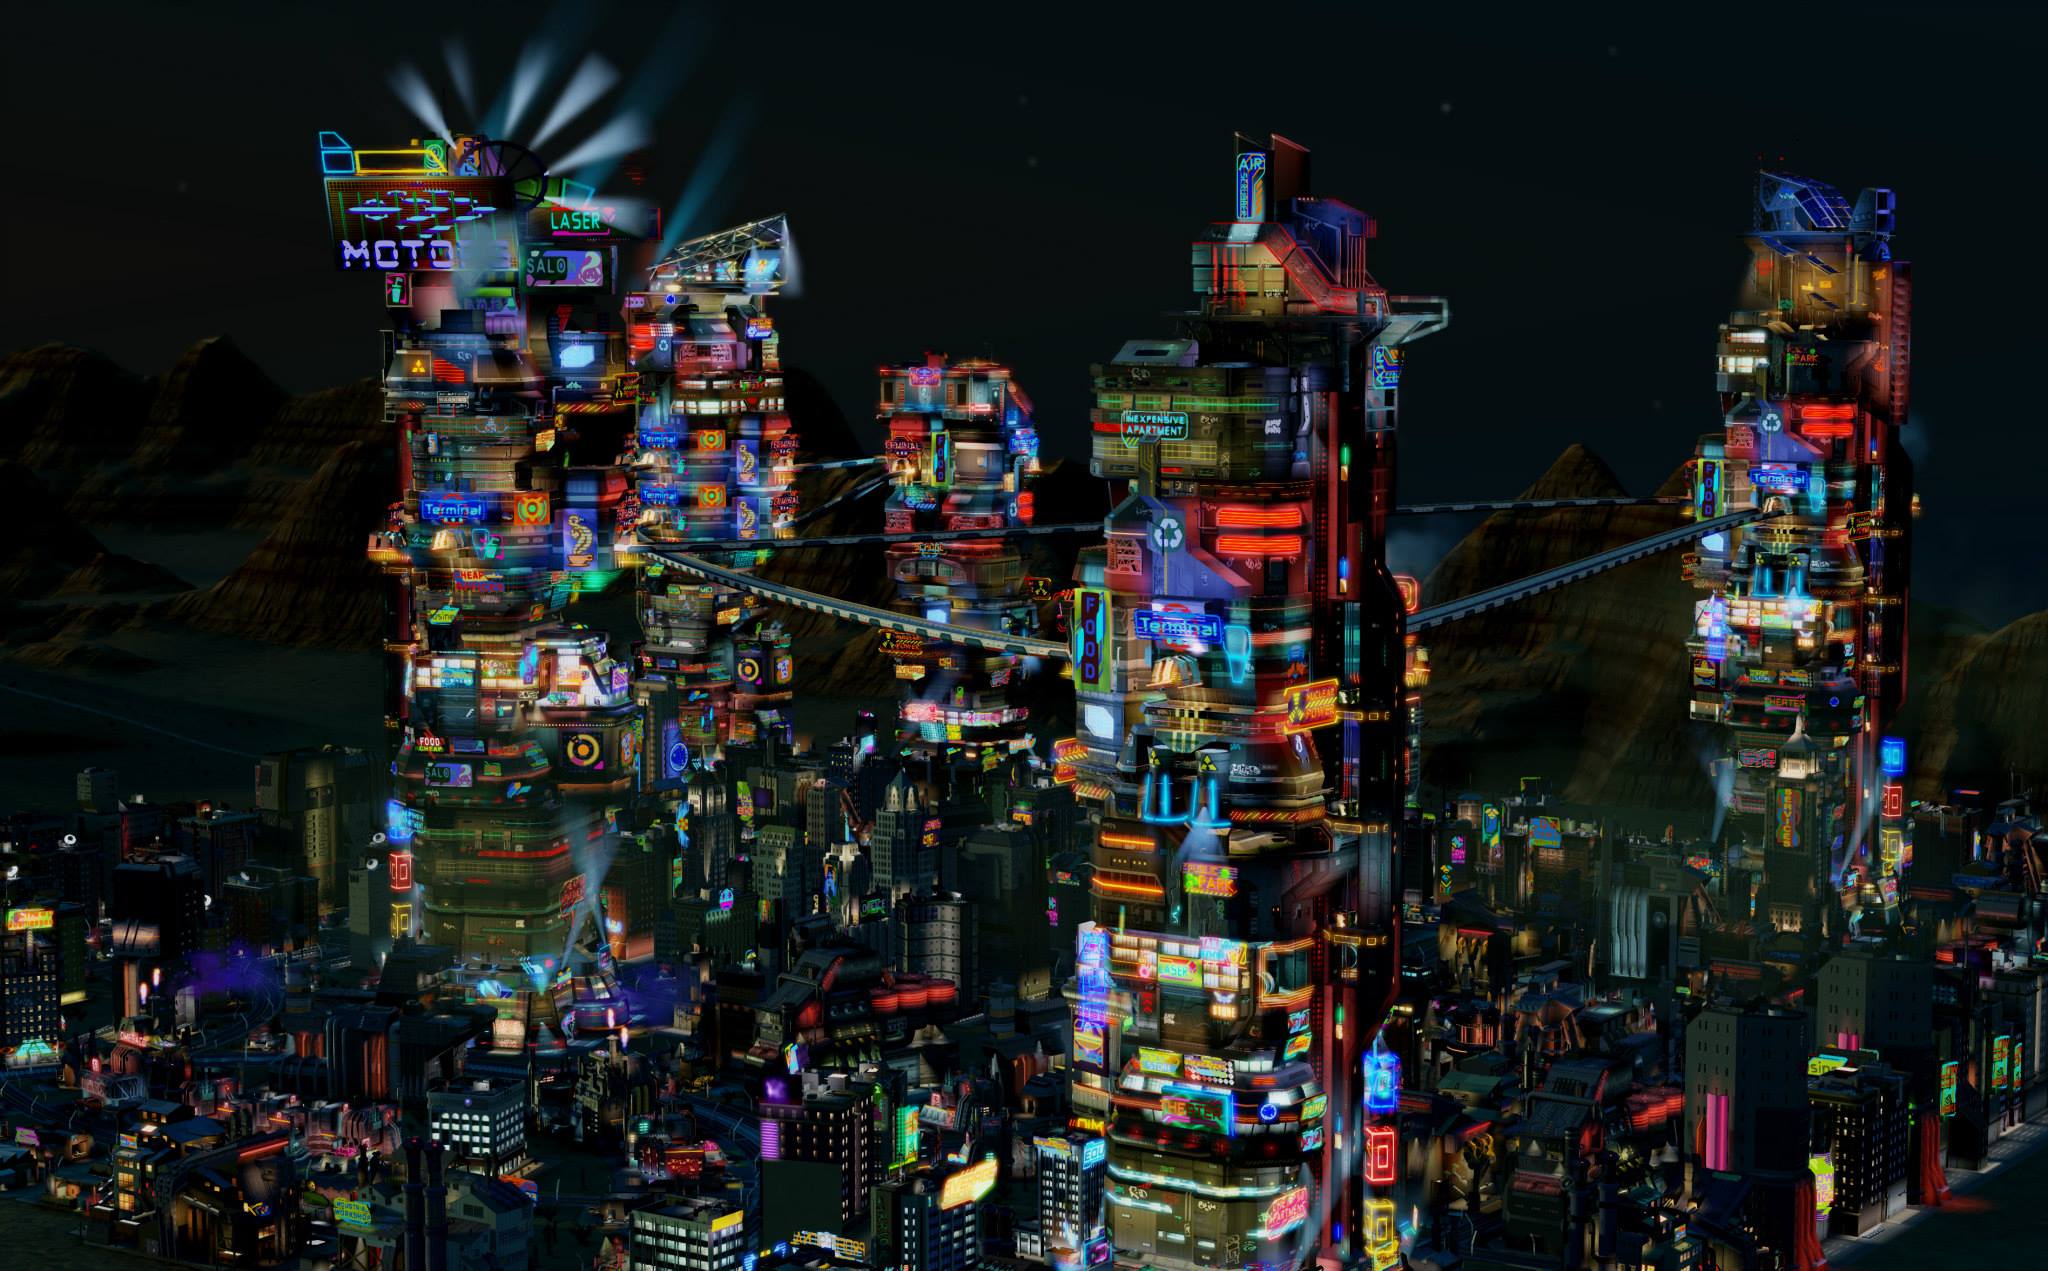 simcity cities of tomorrow tutorial